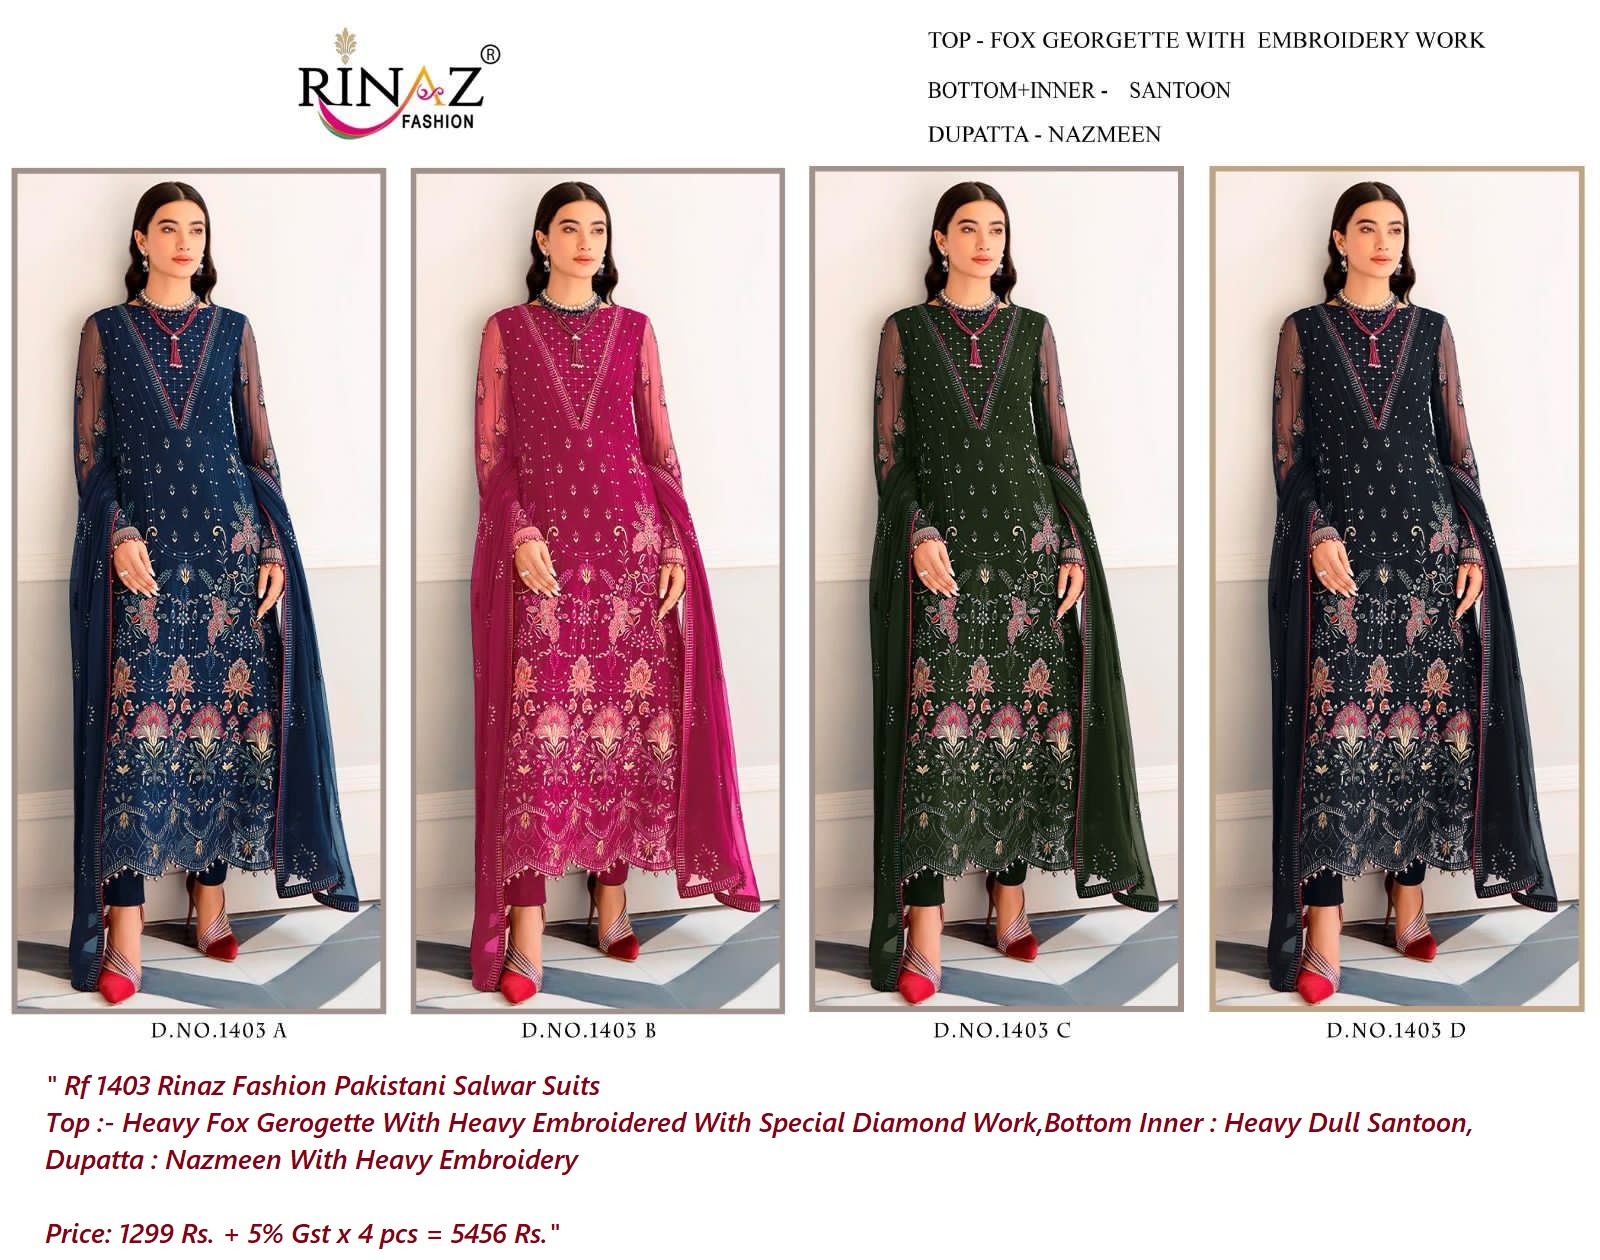 Rf 1403 Rinaz Fashion Pakistani Salwar Suits